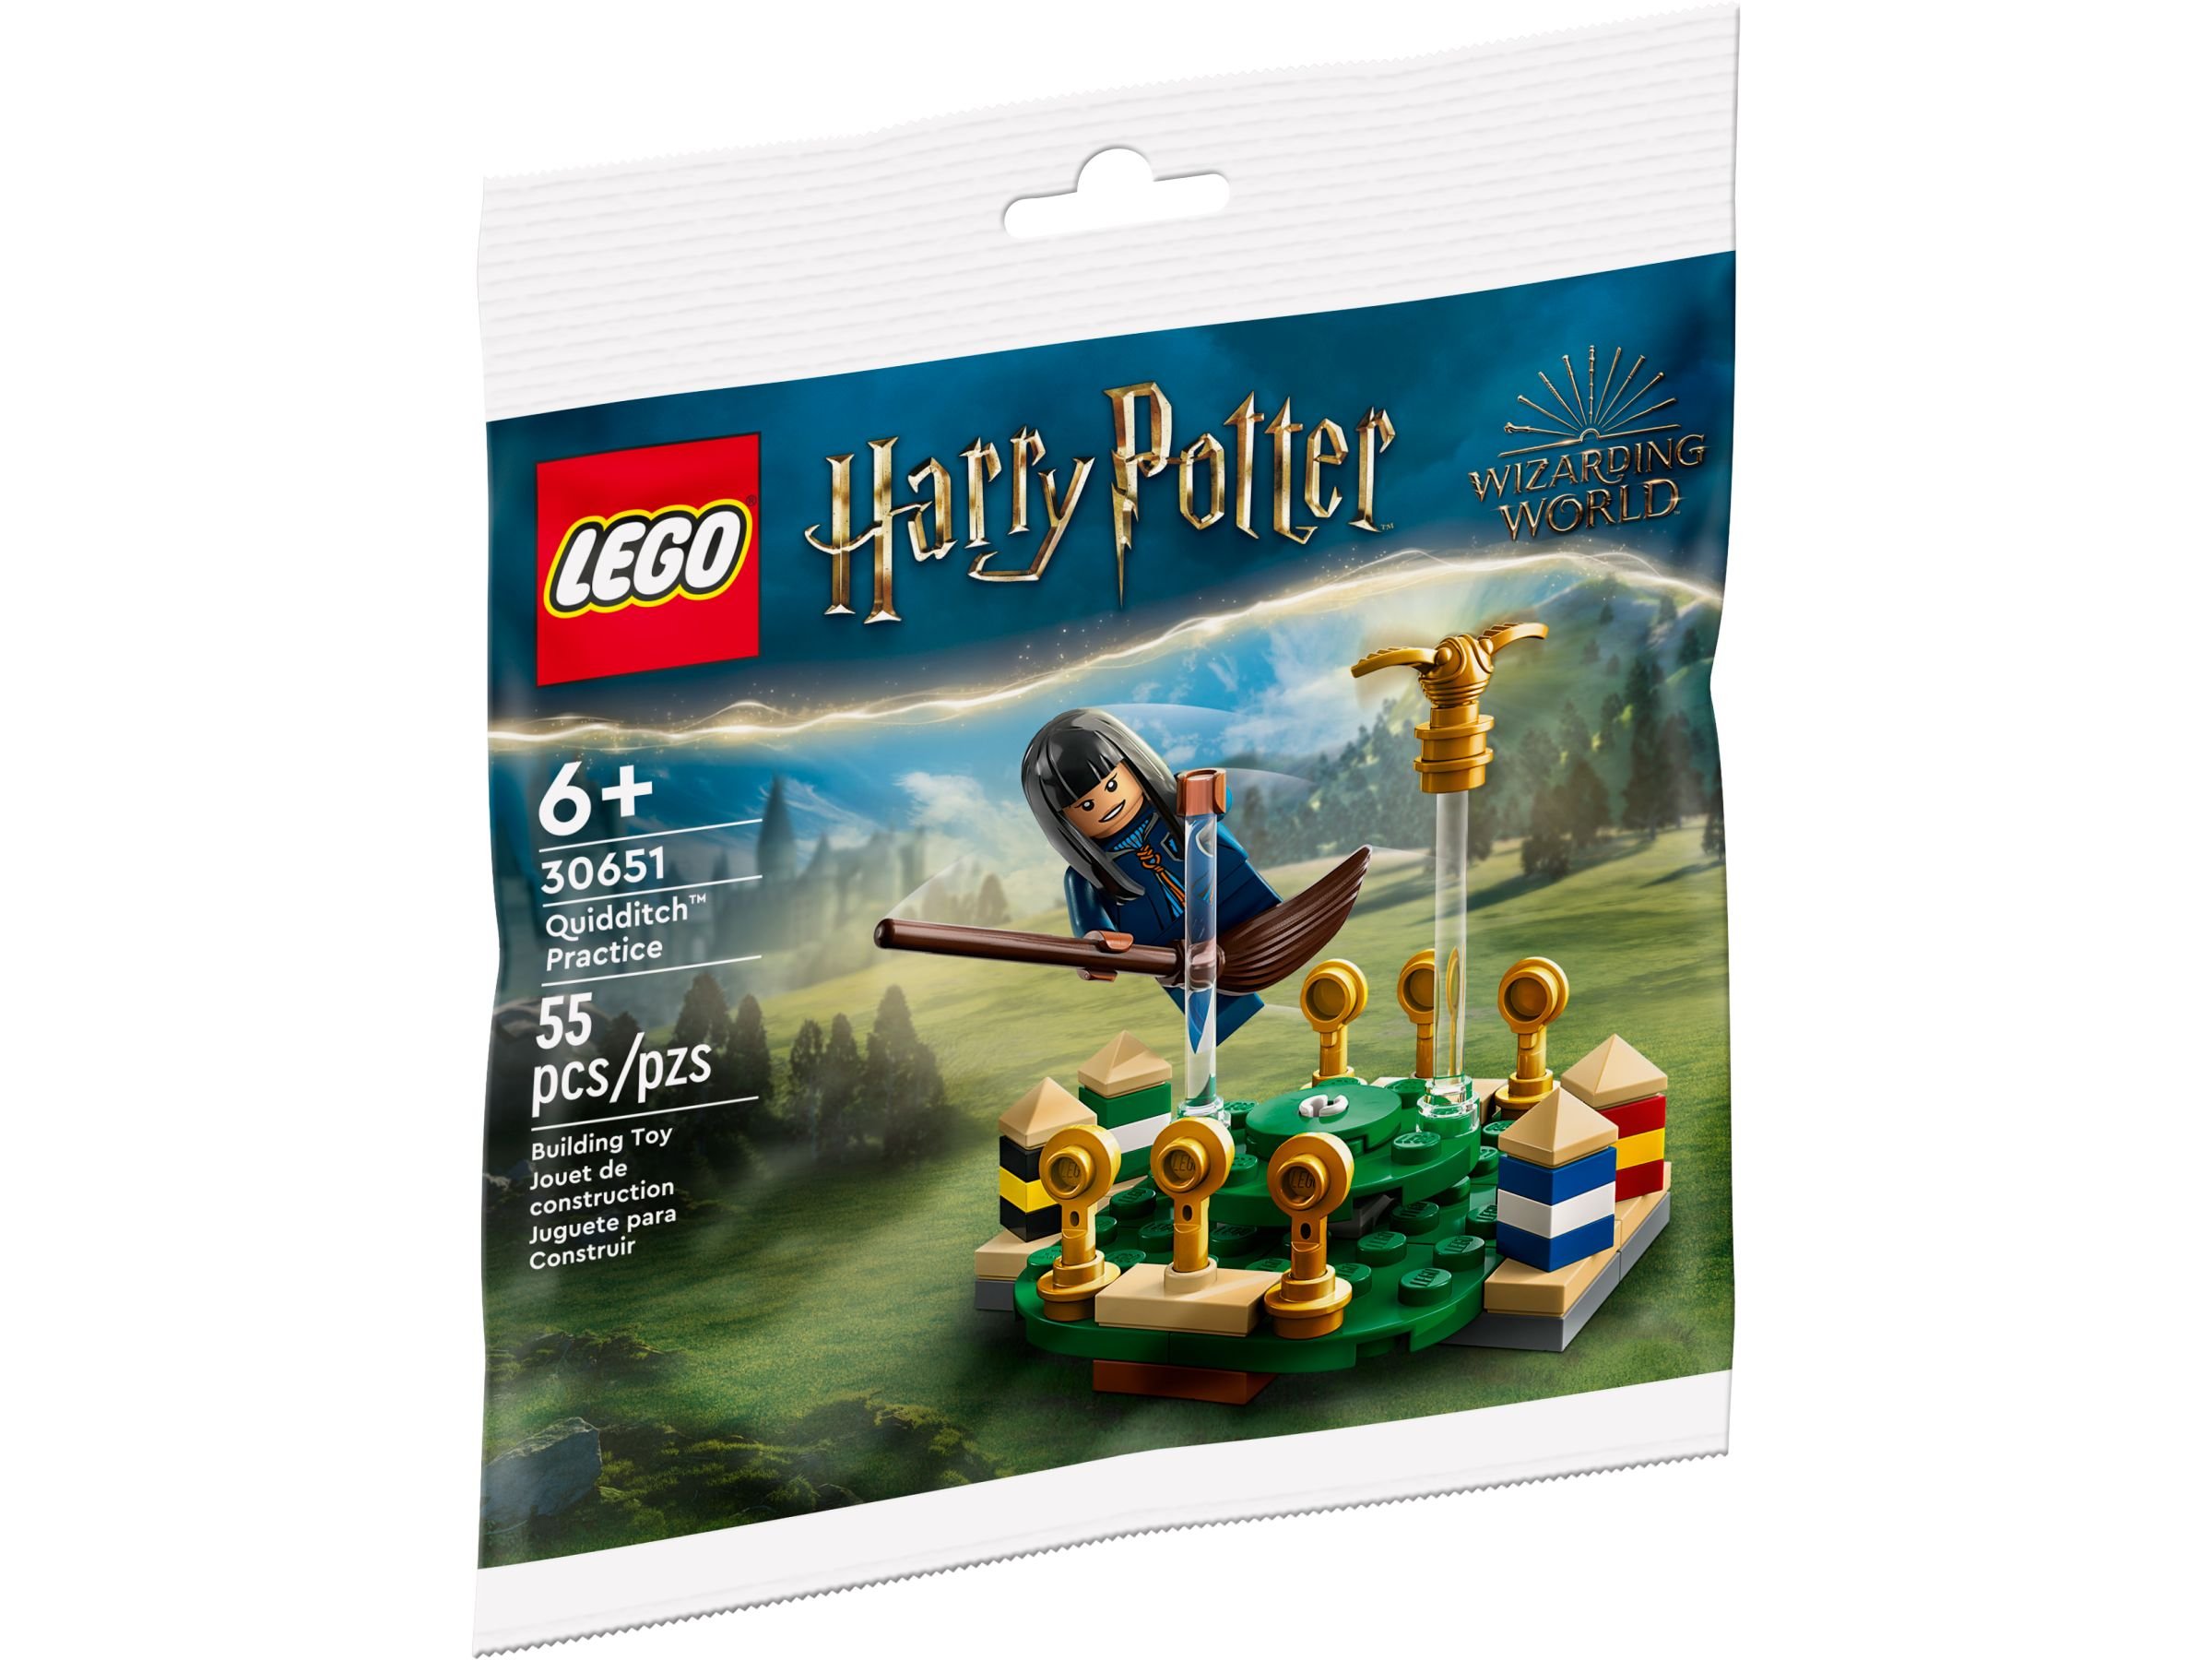 LEGO Harry Potter 30651 Quidditch™ Training LEGO_30651_alt1.jpg